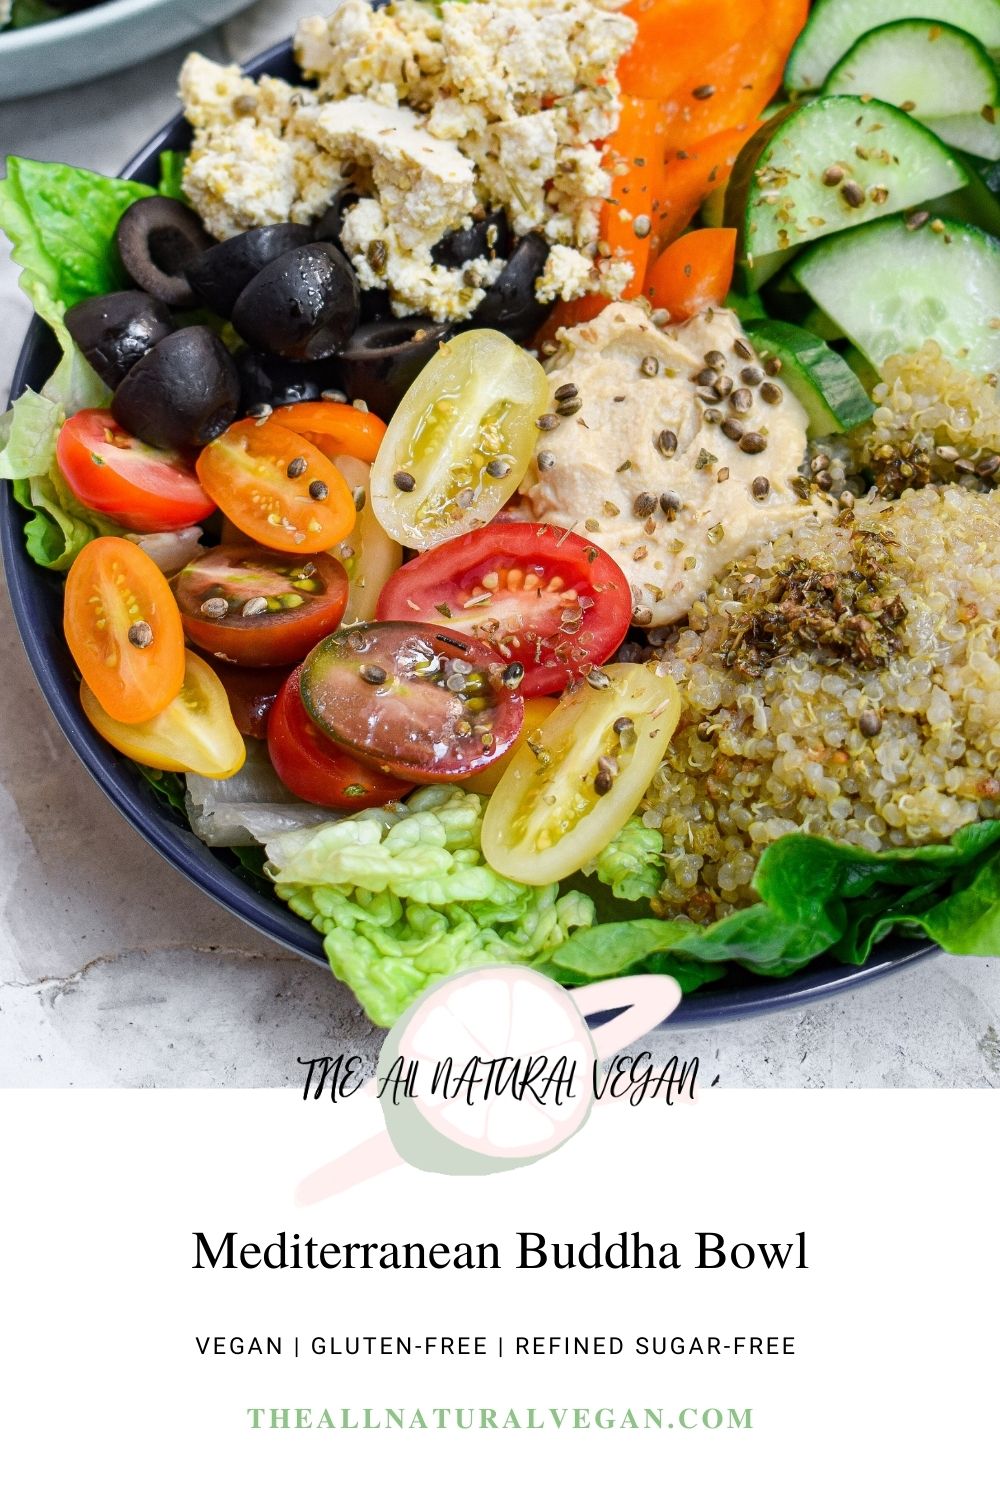 Mediterranean buddha bowl recipe card stating this recipe is vegan, reined sugar-free, and  gluten-free